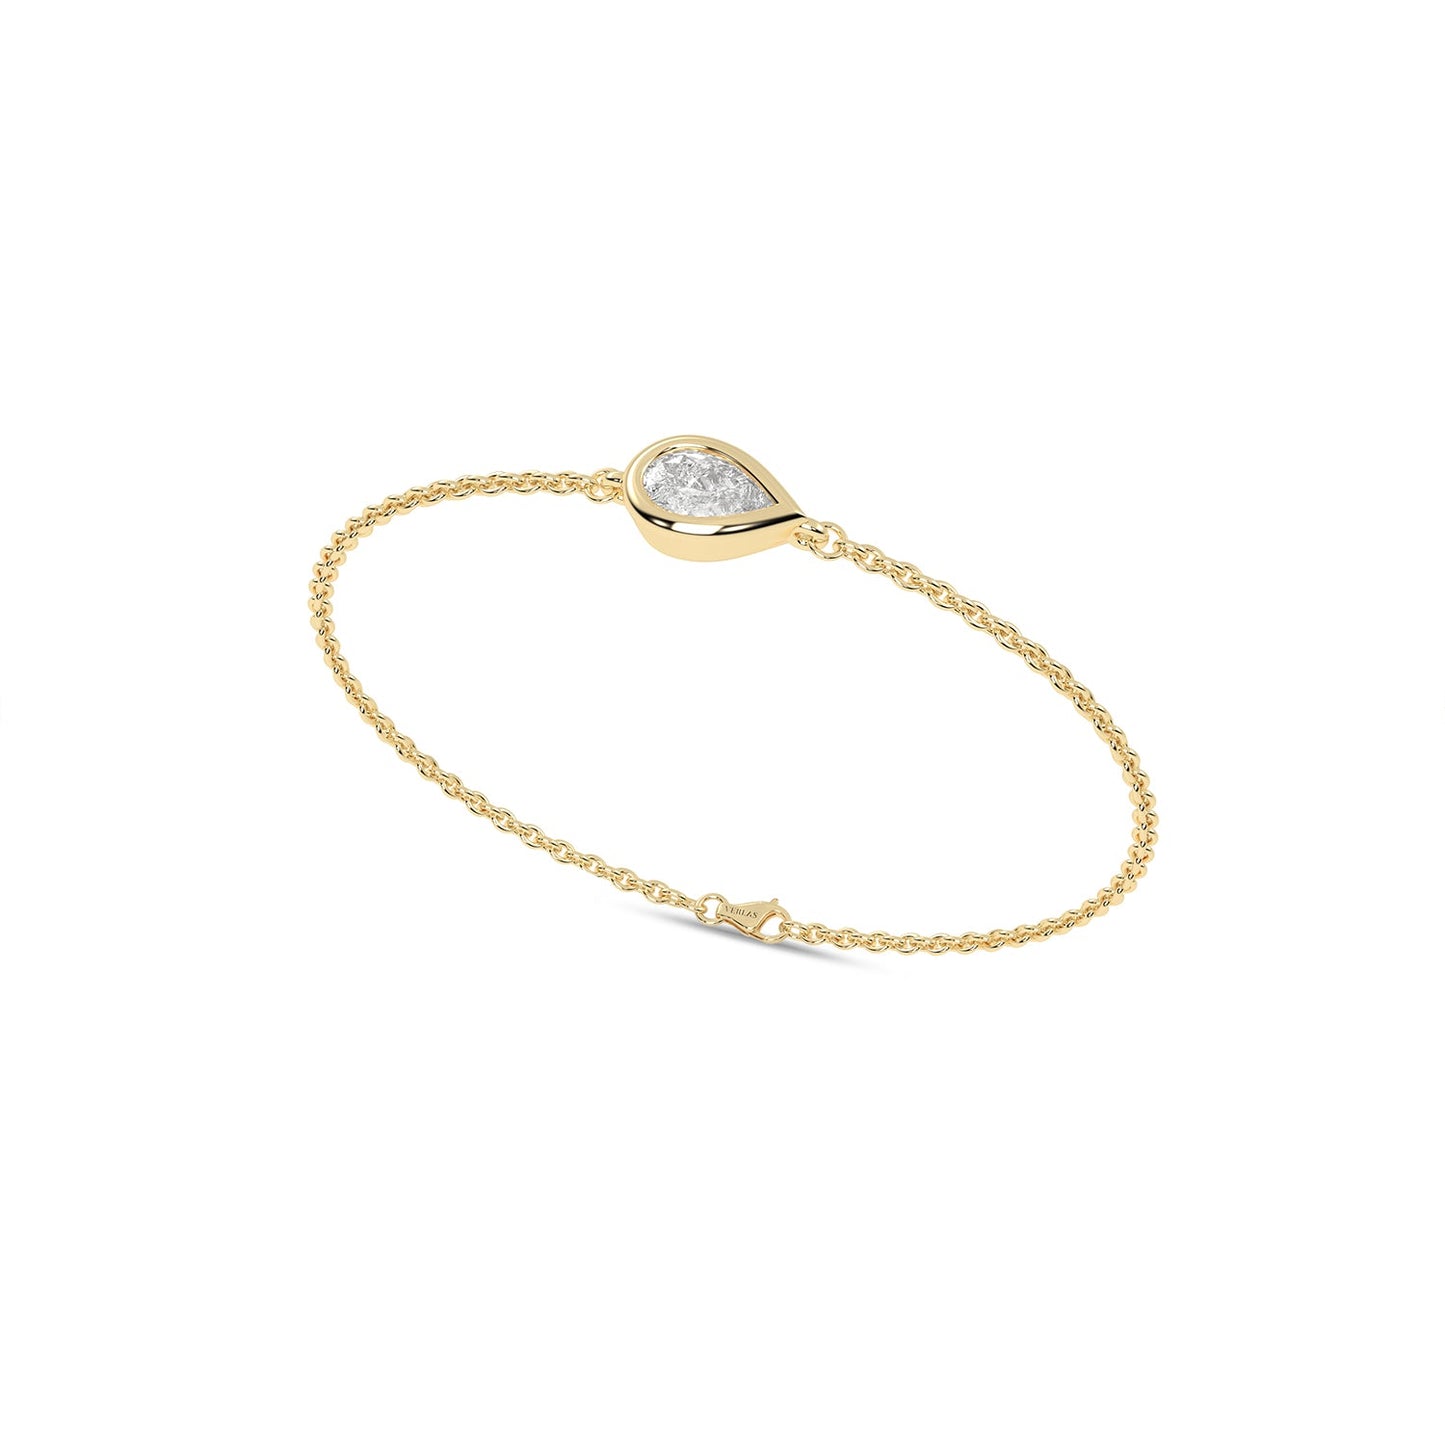 Dewdrop Diamond Glitter Bracelet _Product Angle_1/5 Ct. - 2